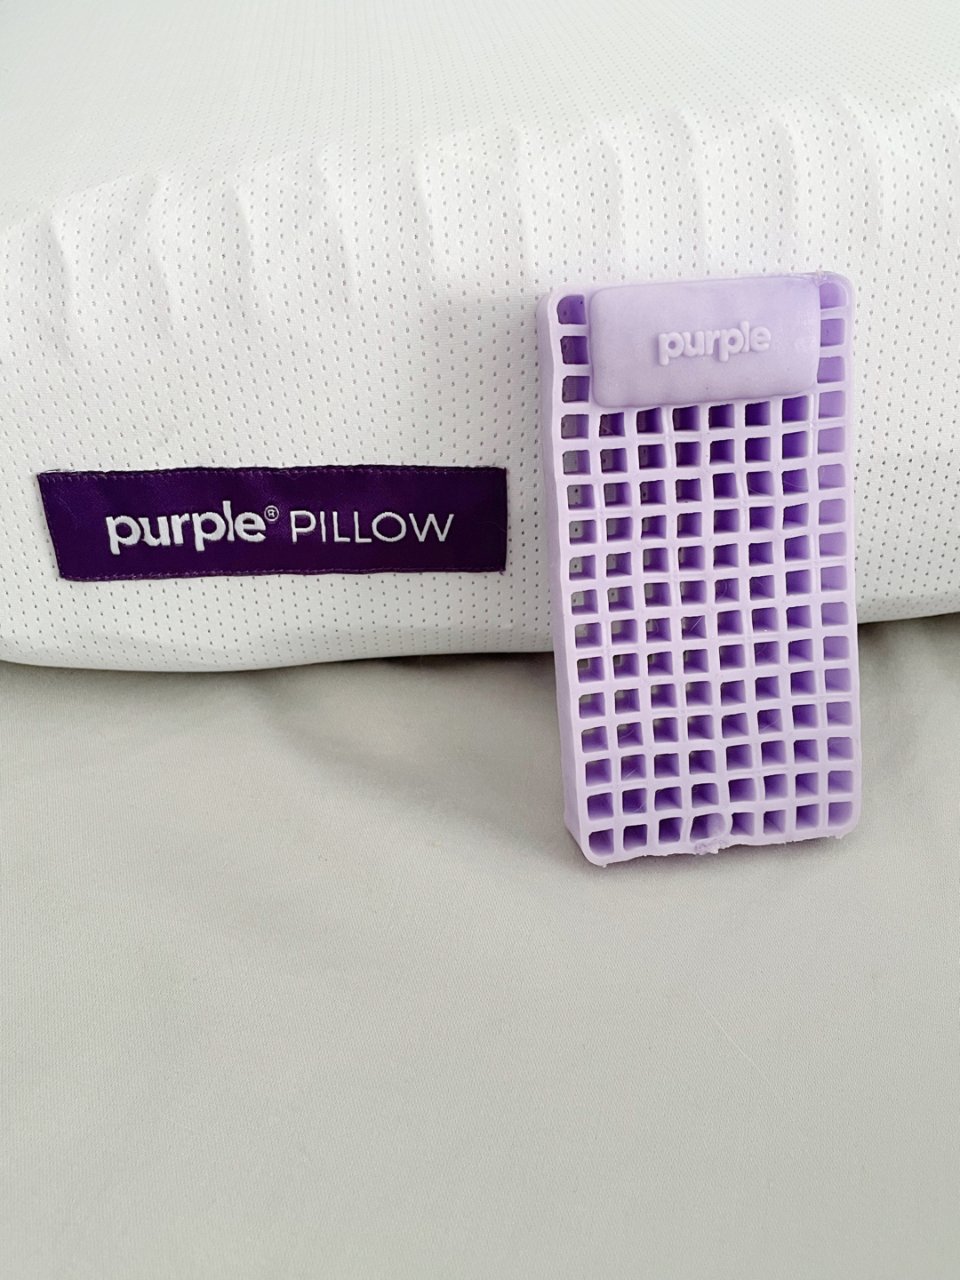 10. Purple黑科技枕头...